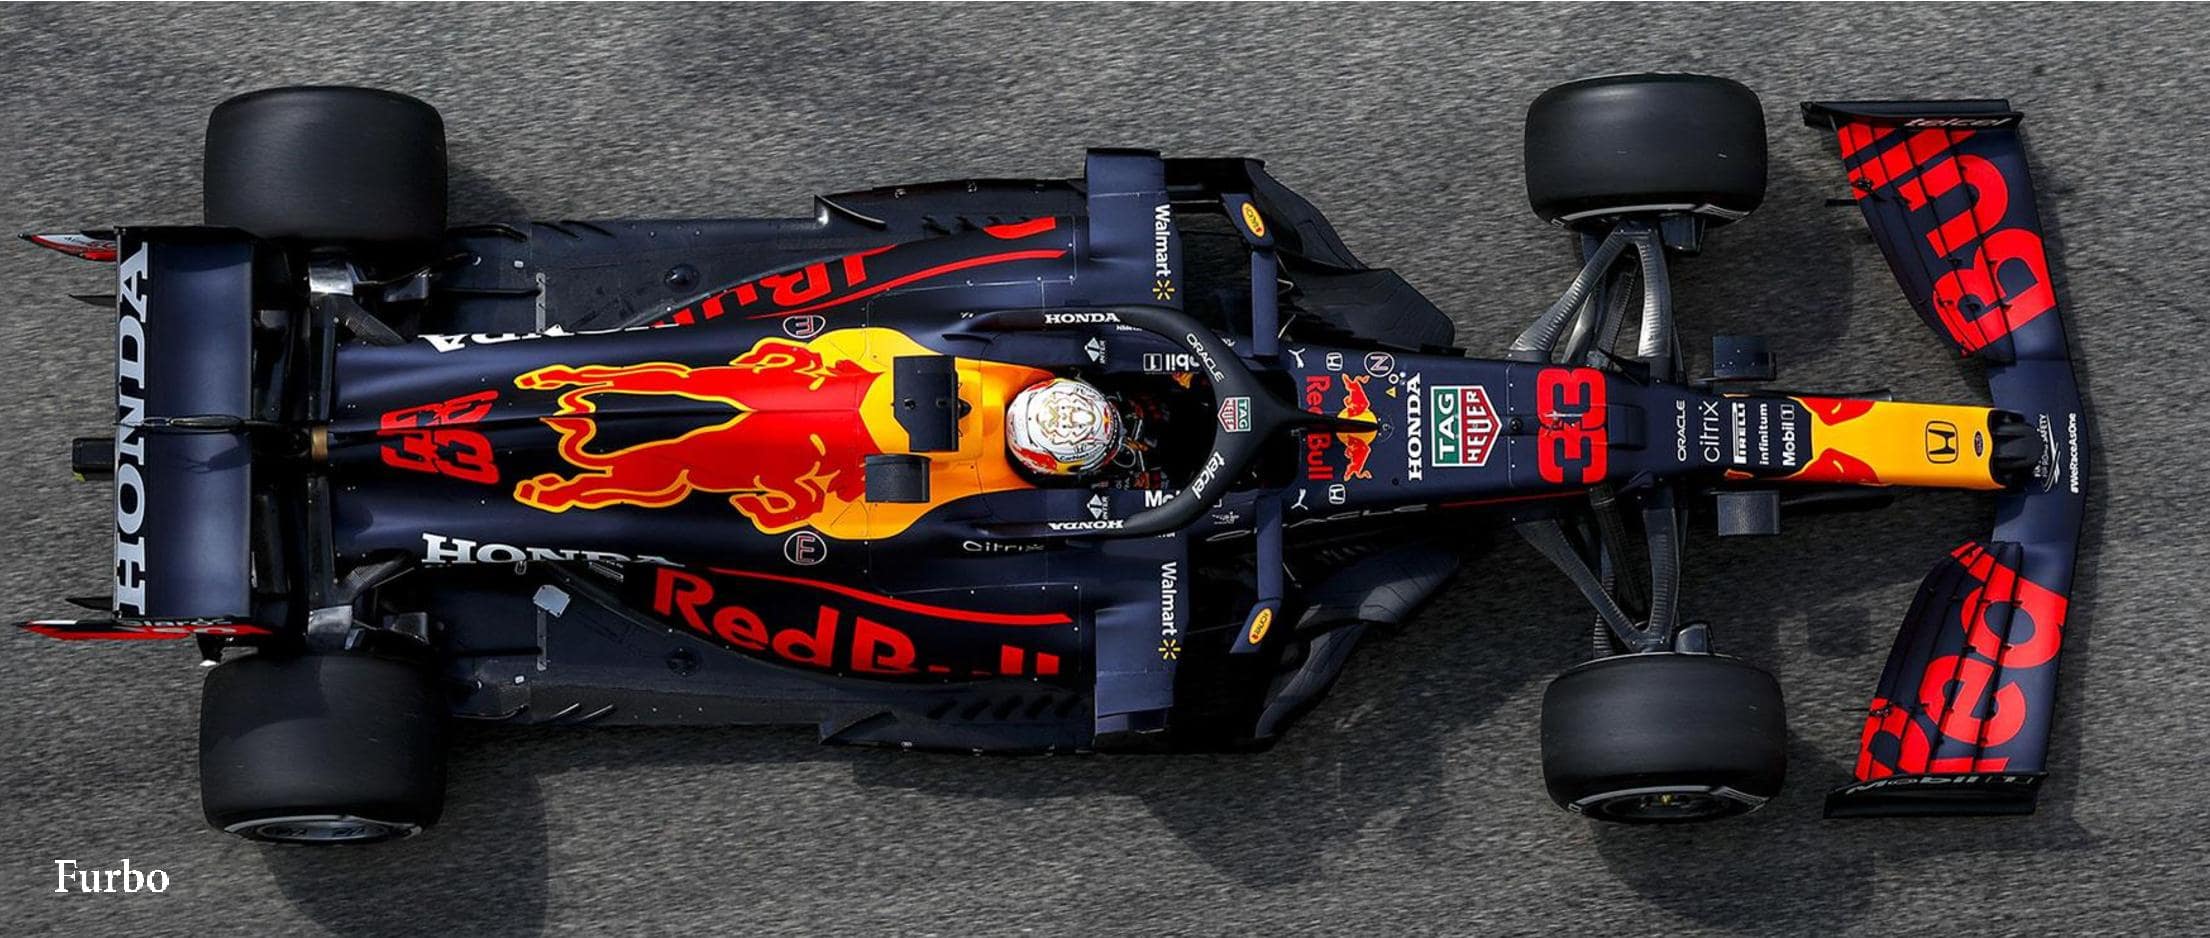 Red Bull Racing تیم مسابقه رد بول